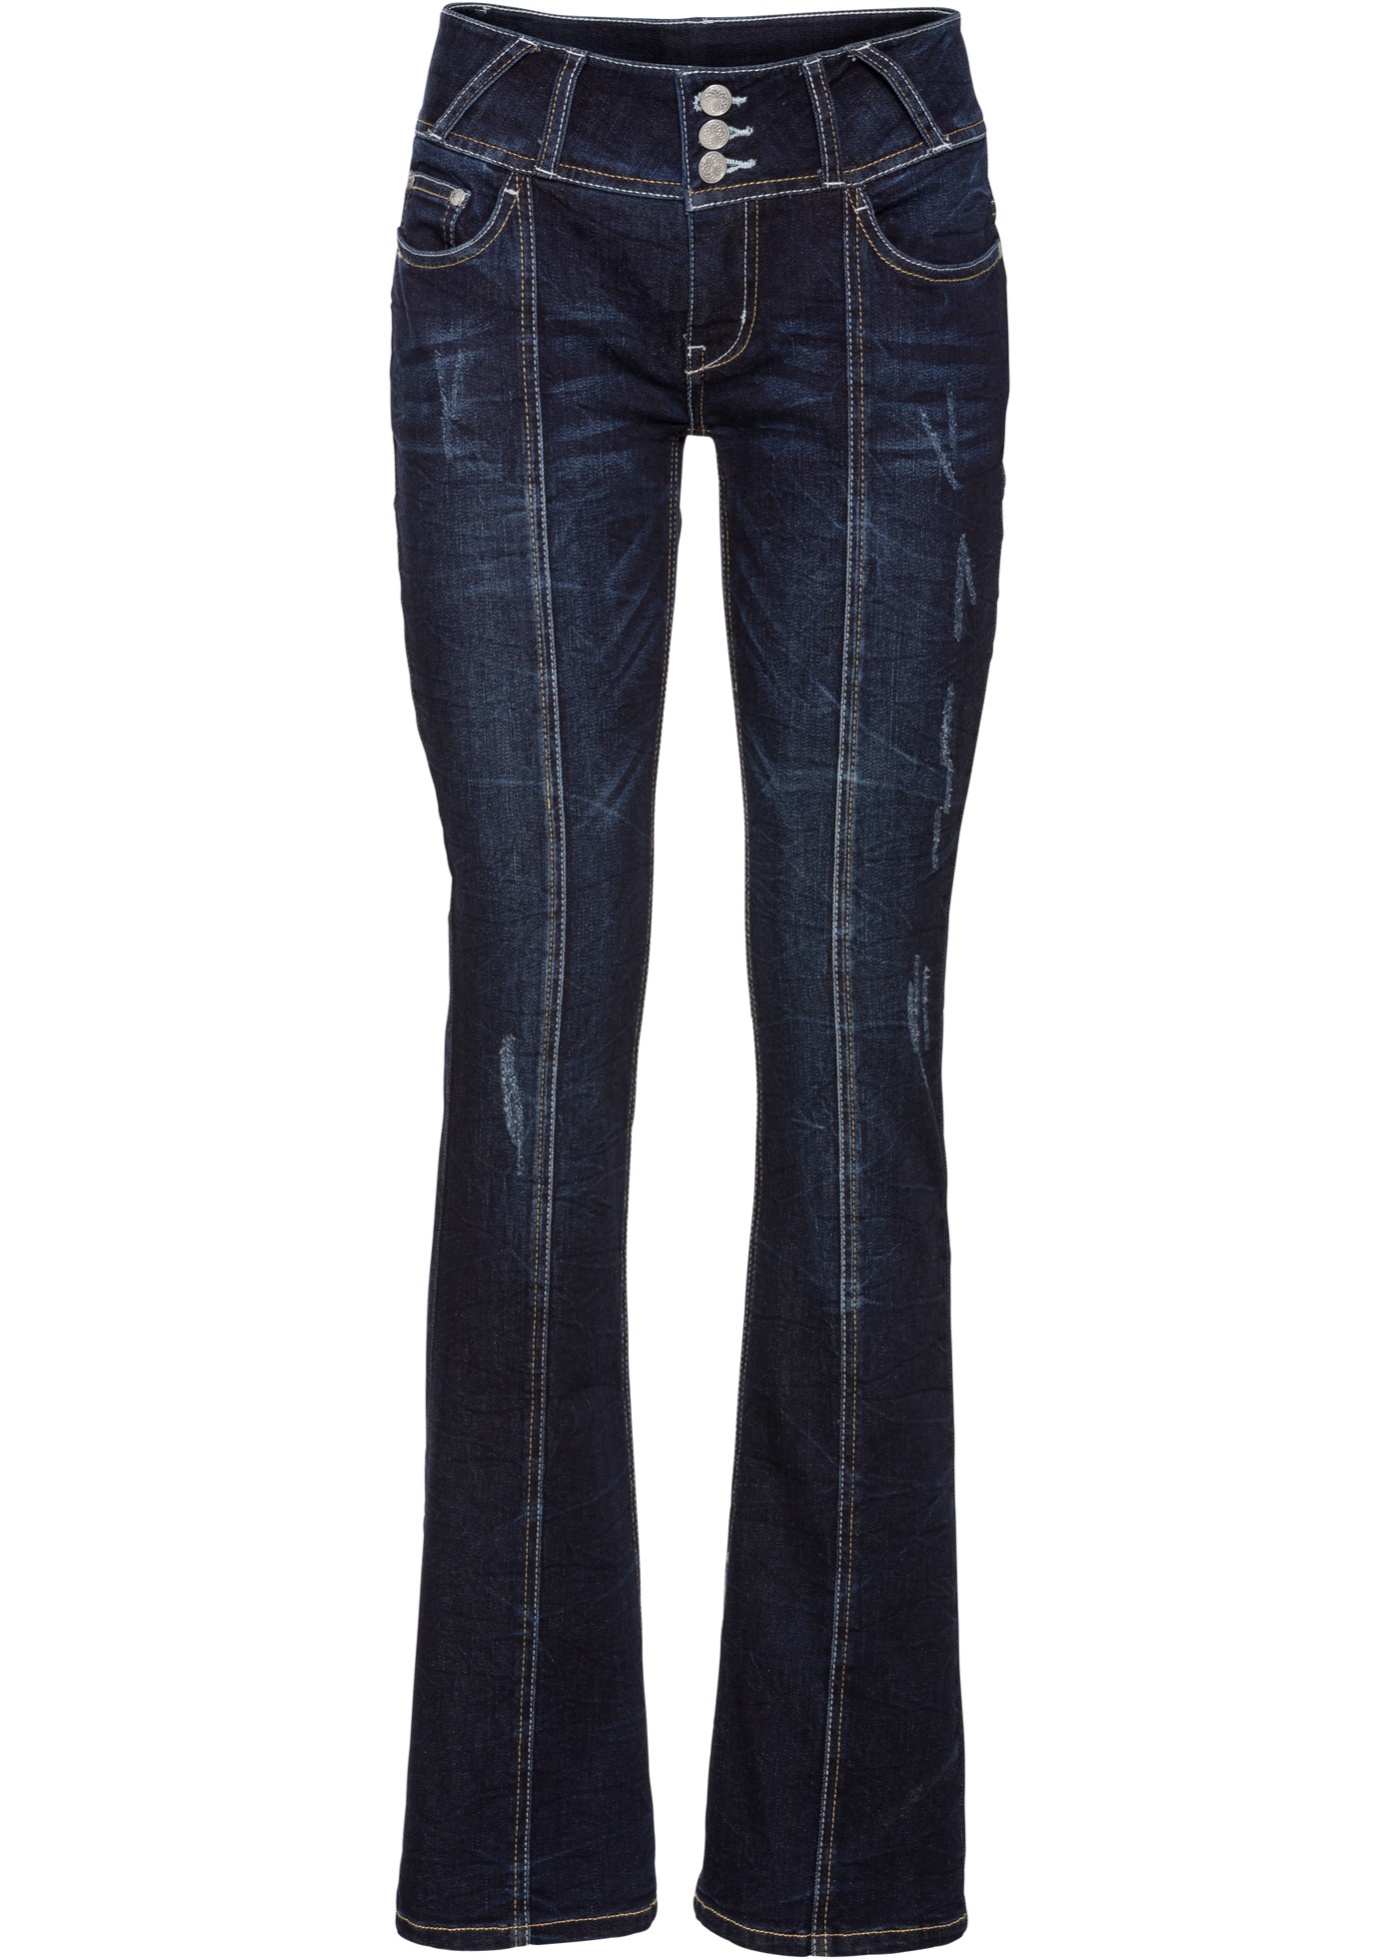 Stylishe Jeans mit Used-Details (96018695) in dunkelblau denim